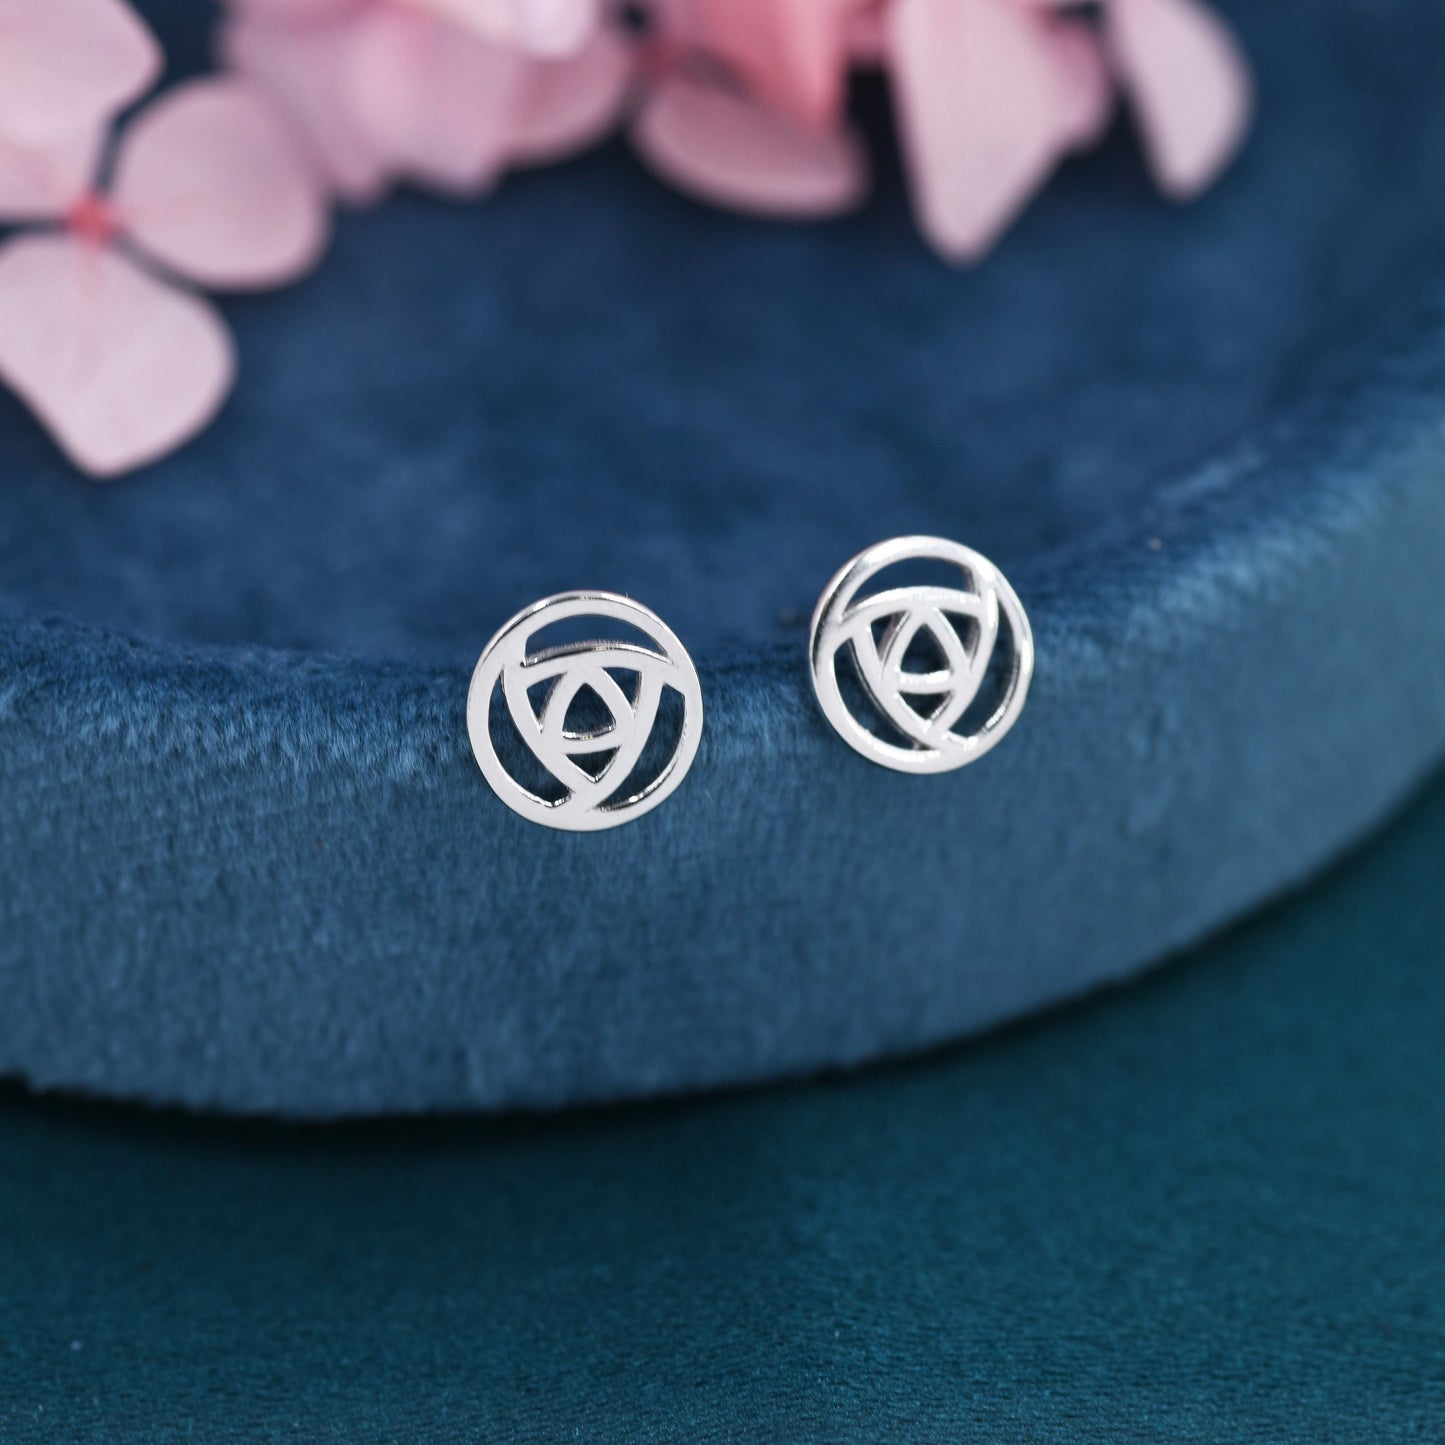 Mackintosh Rose Stud Earrings in Sterling Silver - Scottish Design Flower Earrings  - Cute,  Fun, Whimsical